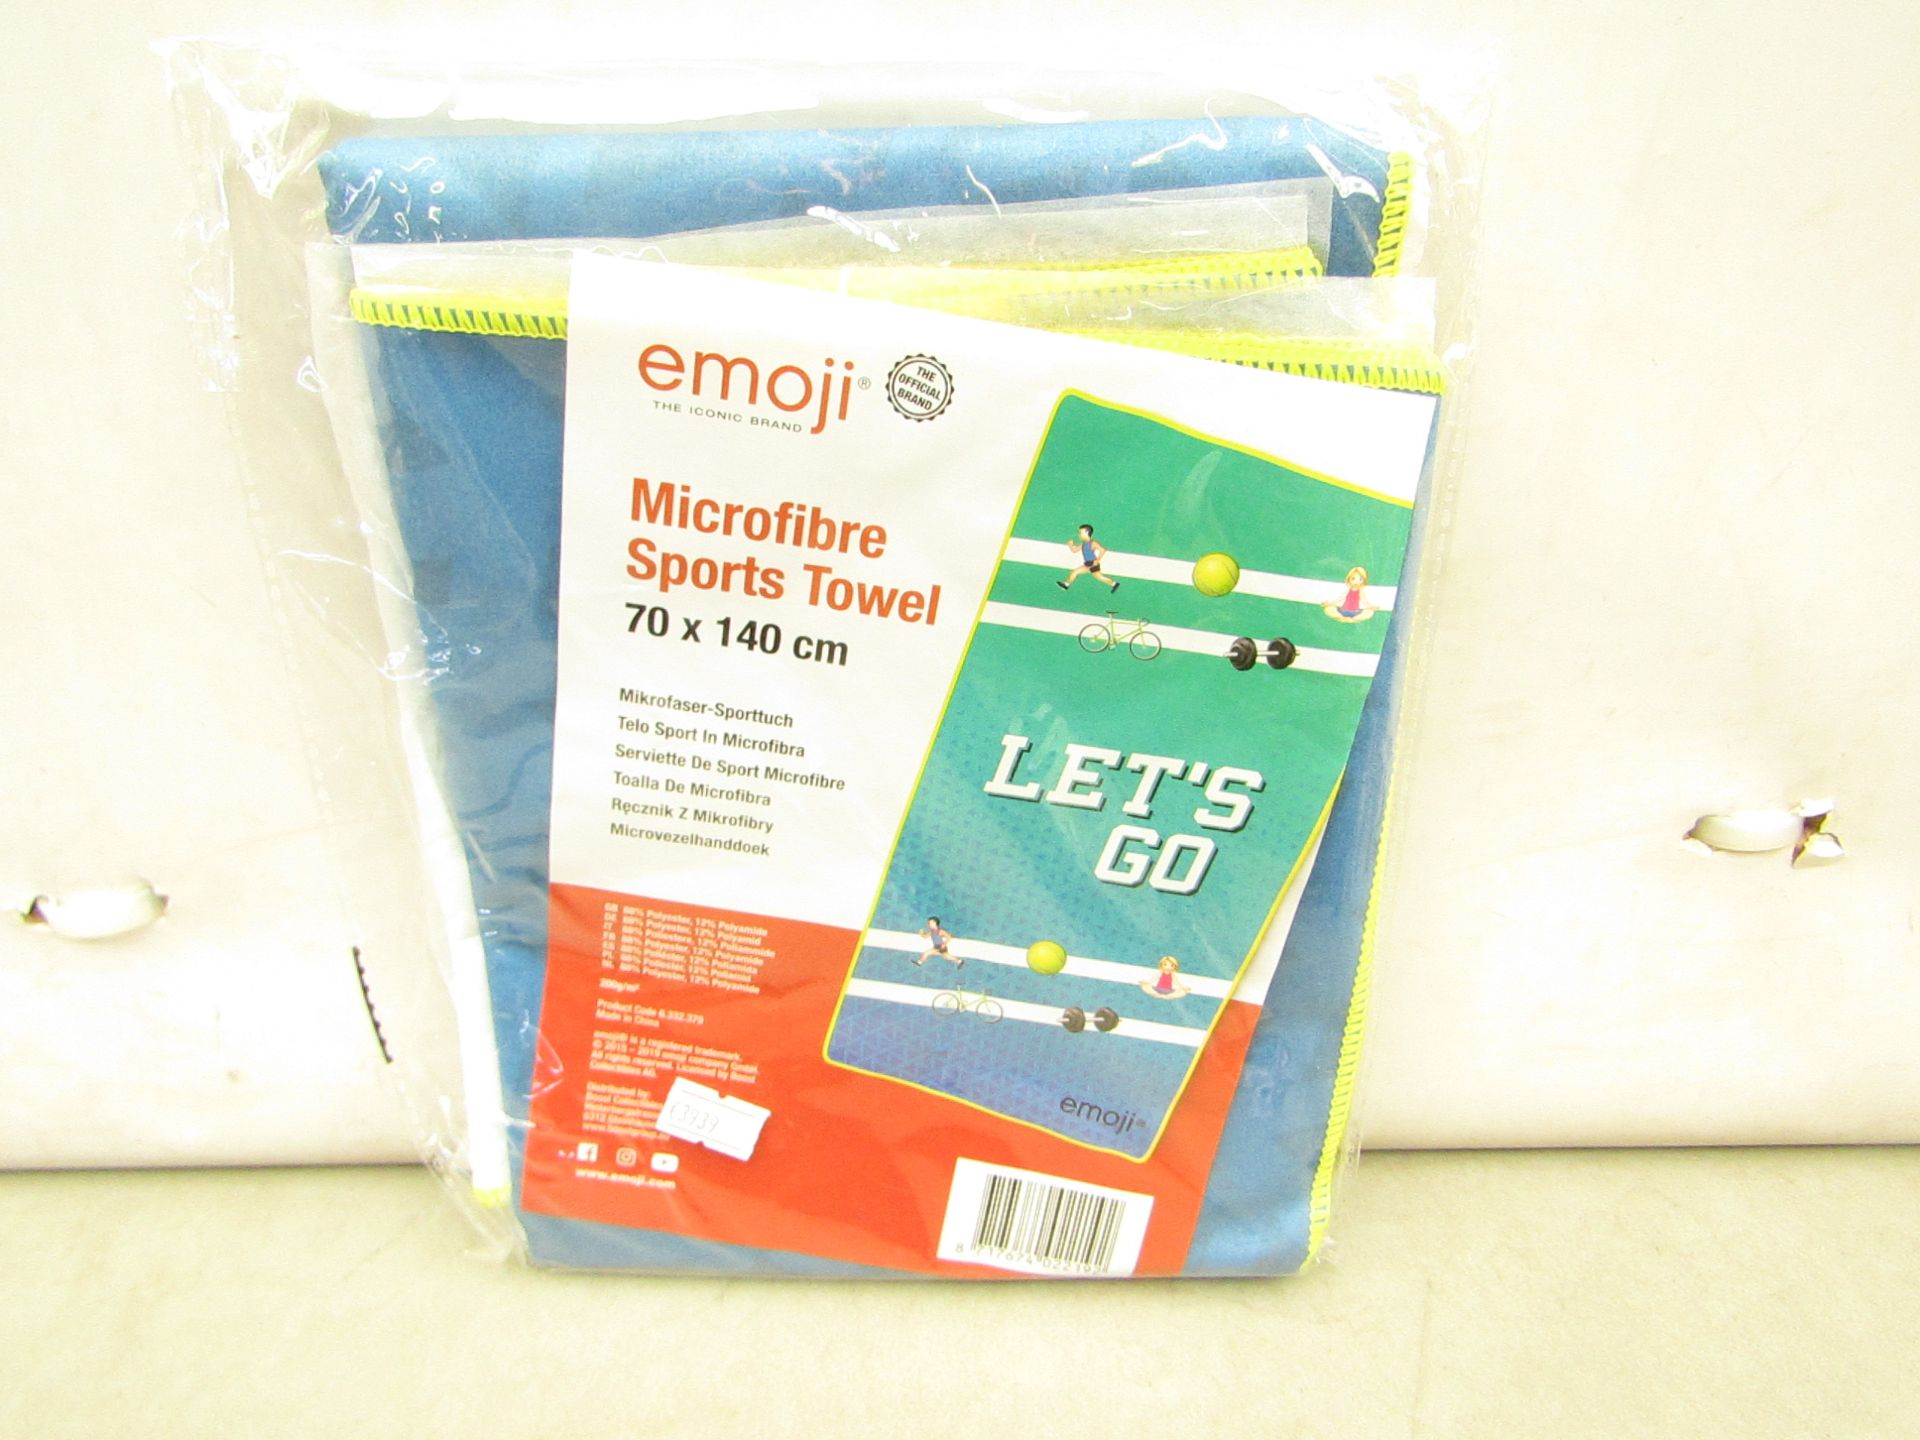 11 x Emoji Microfibre Sports Towels. 70cm x 140cm. New & Packaged